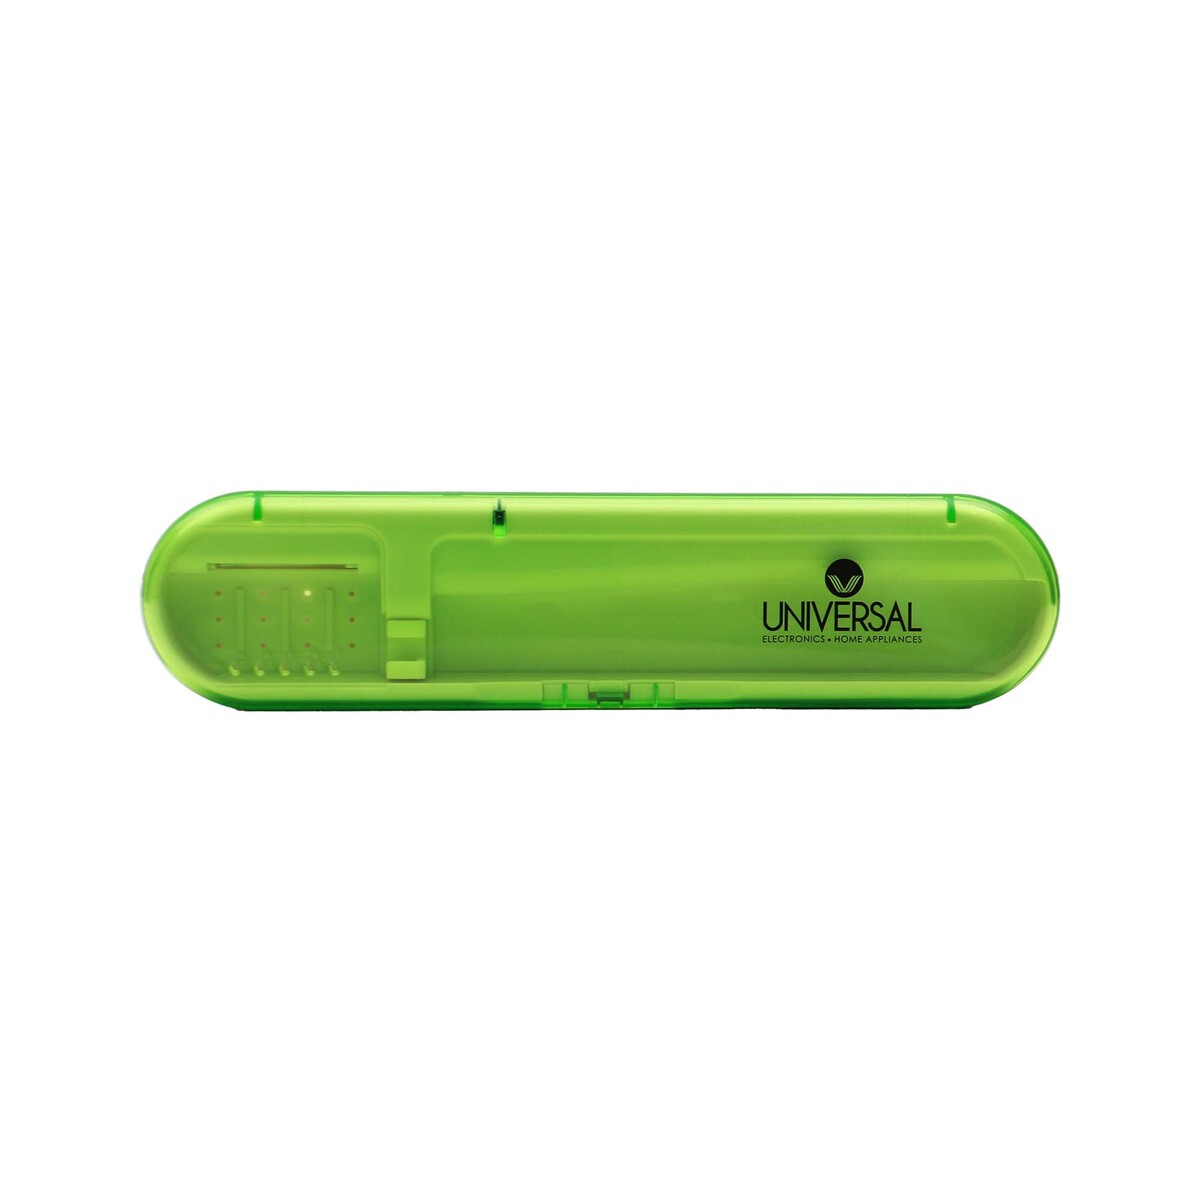 Universal Toothbrush Sterilizer Box UN-TT006